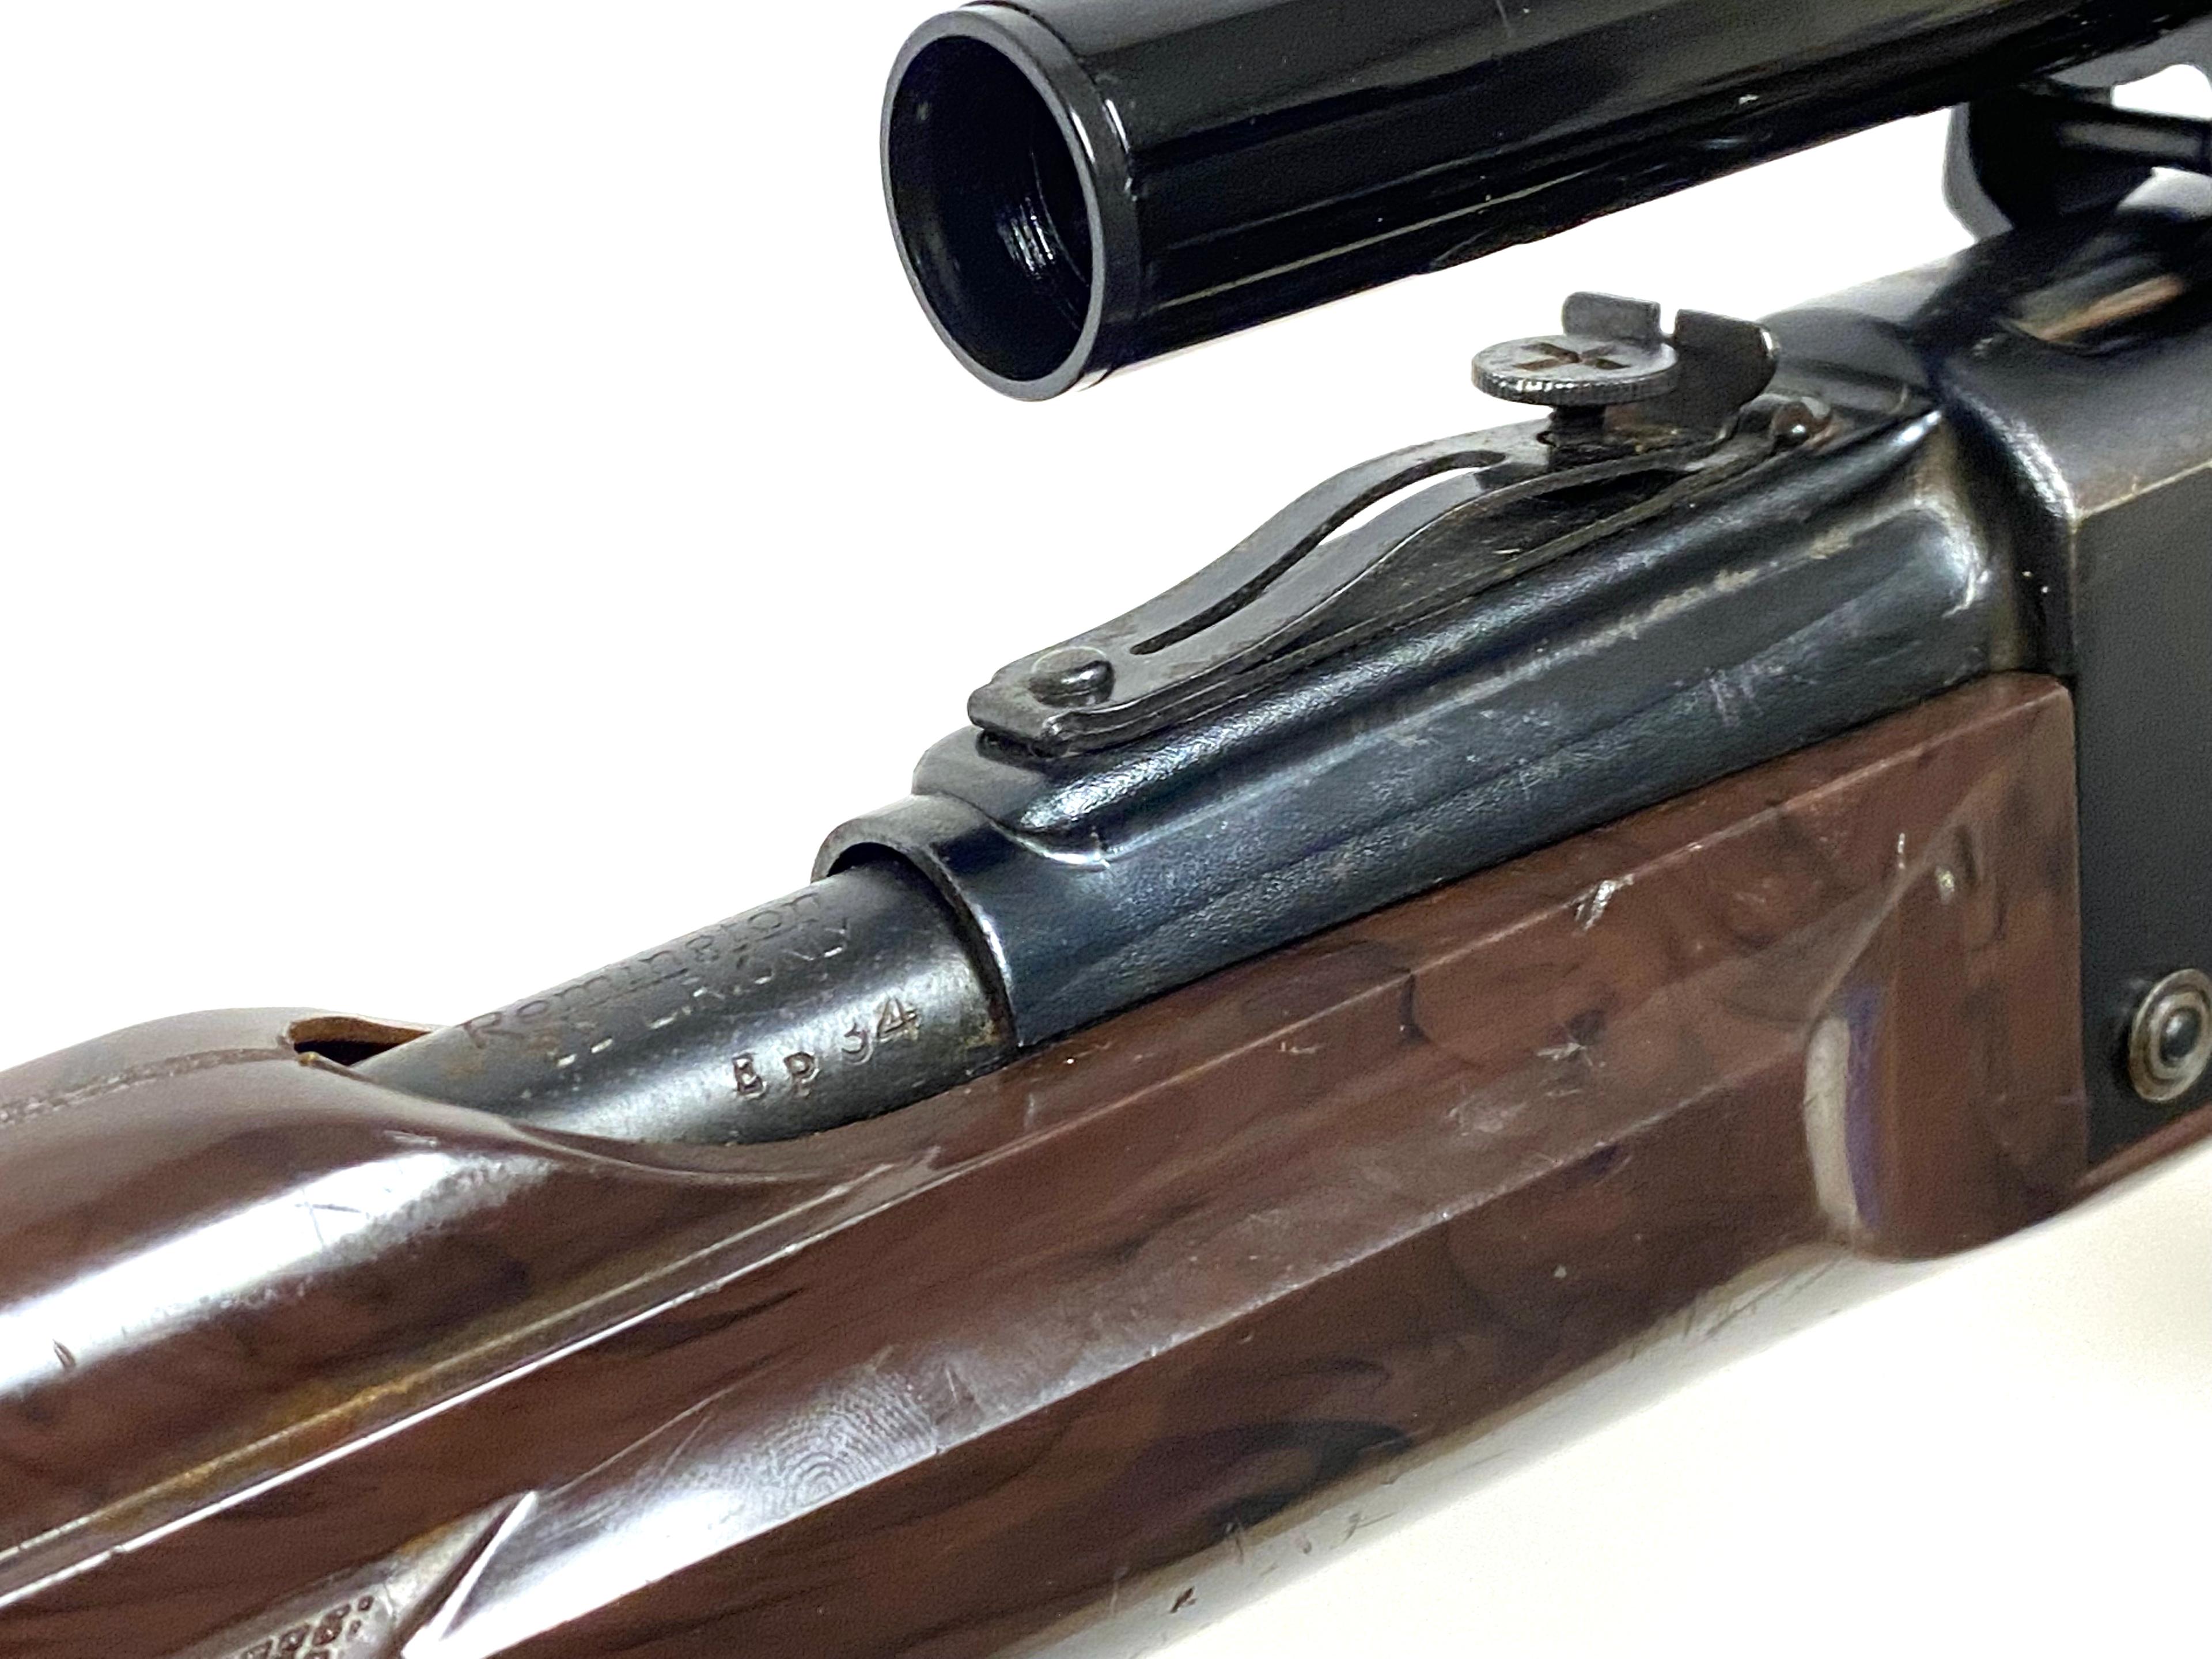 Remington Nylon 66 .22 LR Semi-Automatic Rifle with Scope